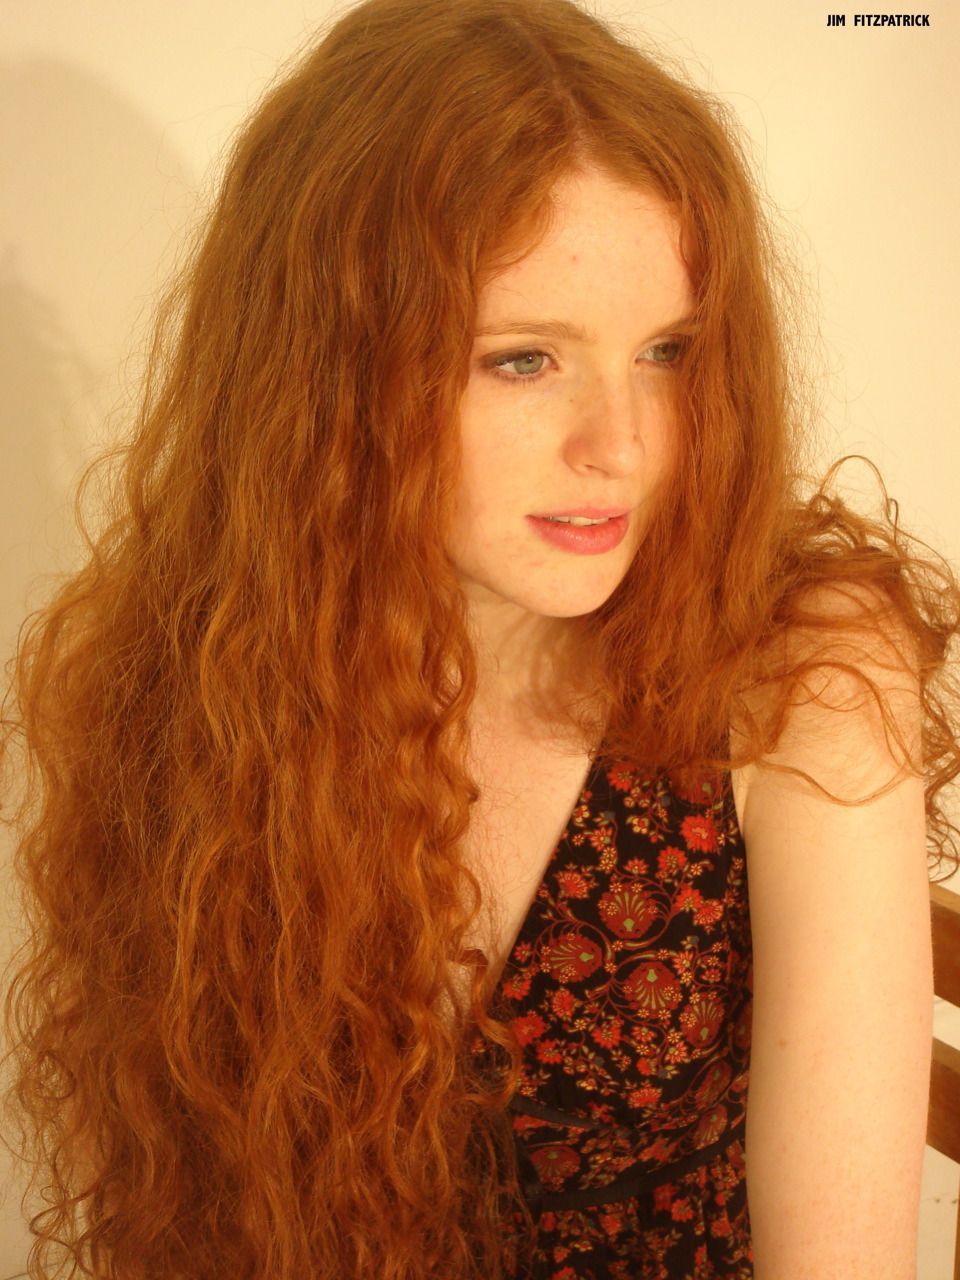 Irish redhead woman photos erotic picture